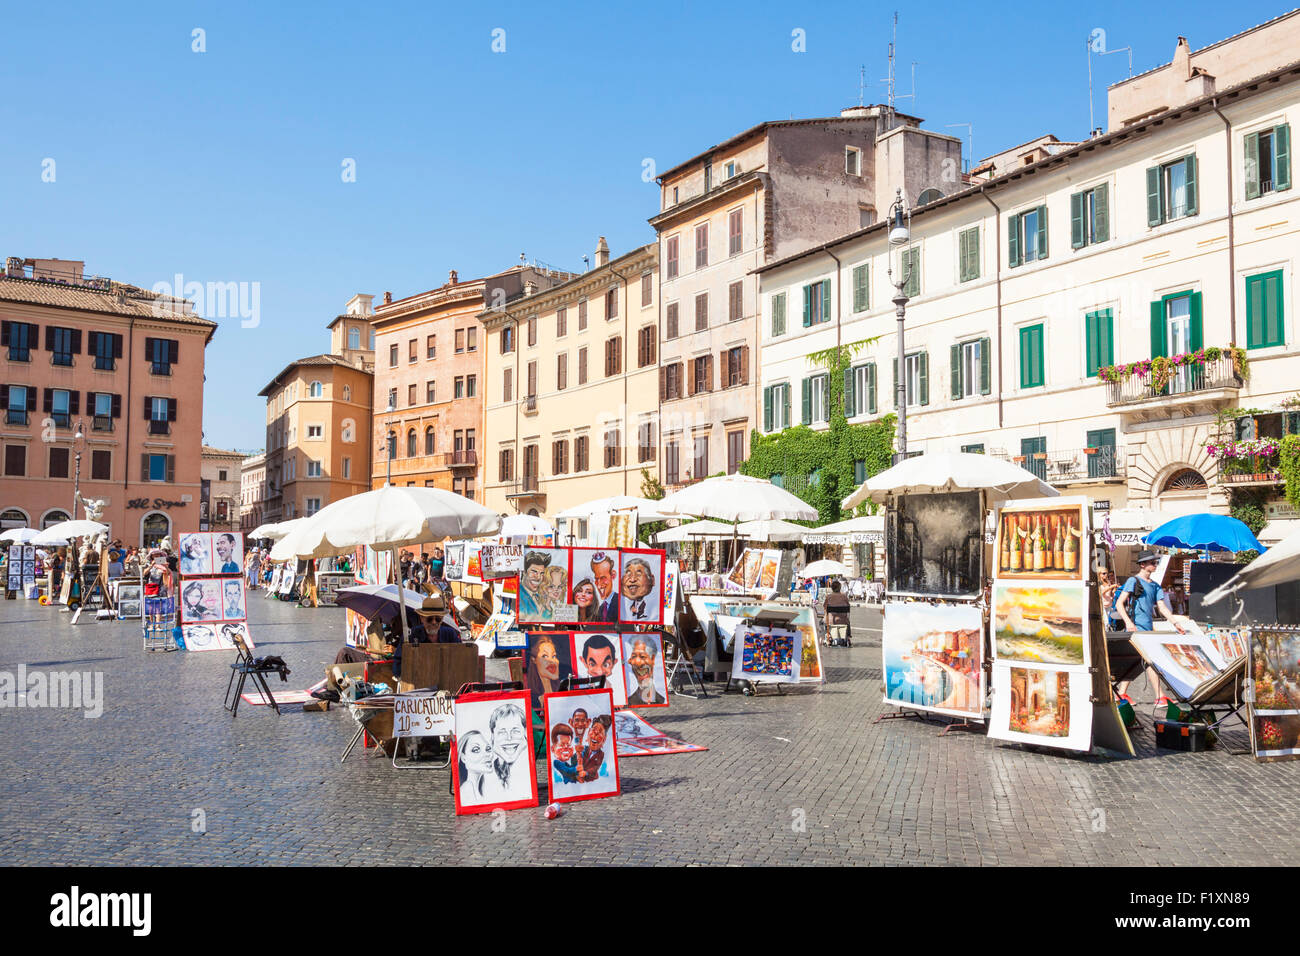 Artistas pintando y vendiendo ilustraciones en la Piazza Navona Roma Italia Roma Lazio Italia Europa ue Foto de stock